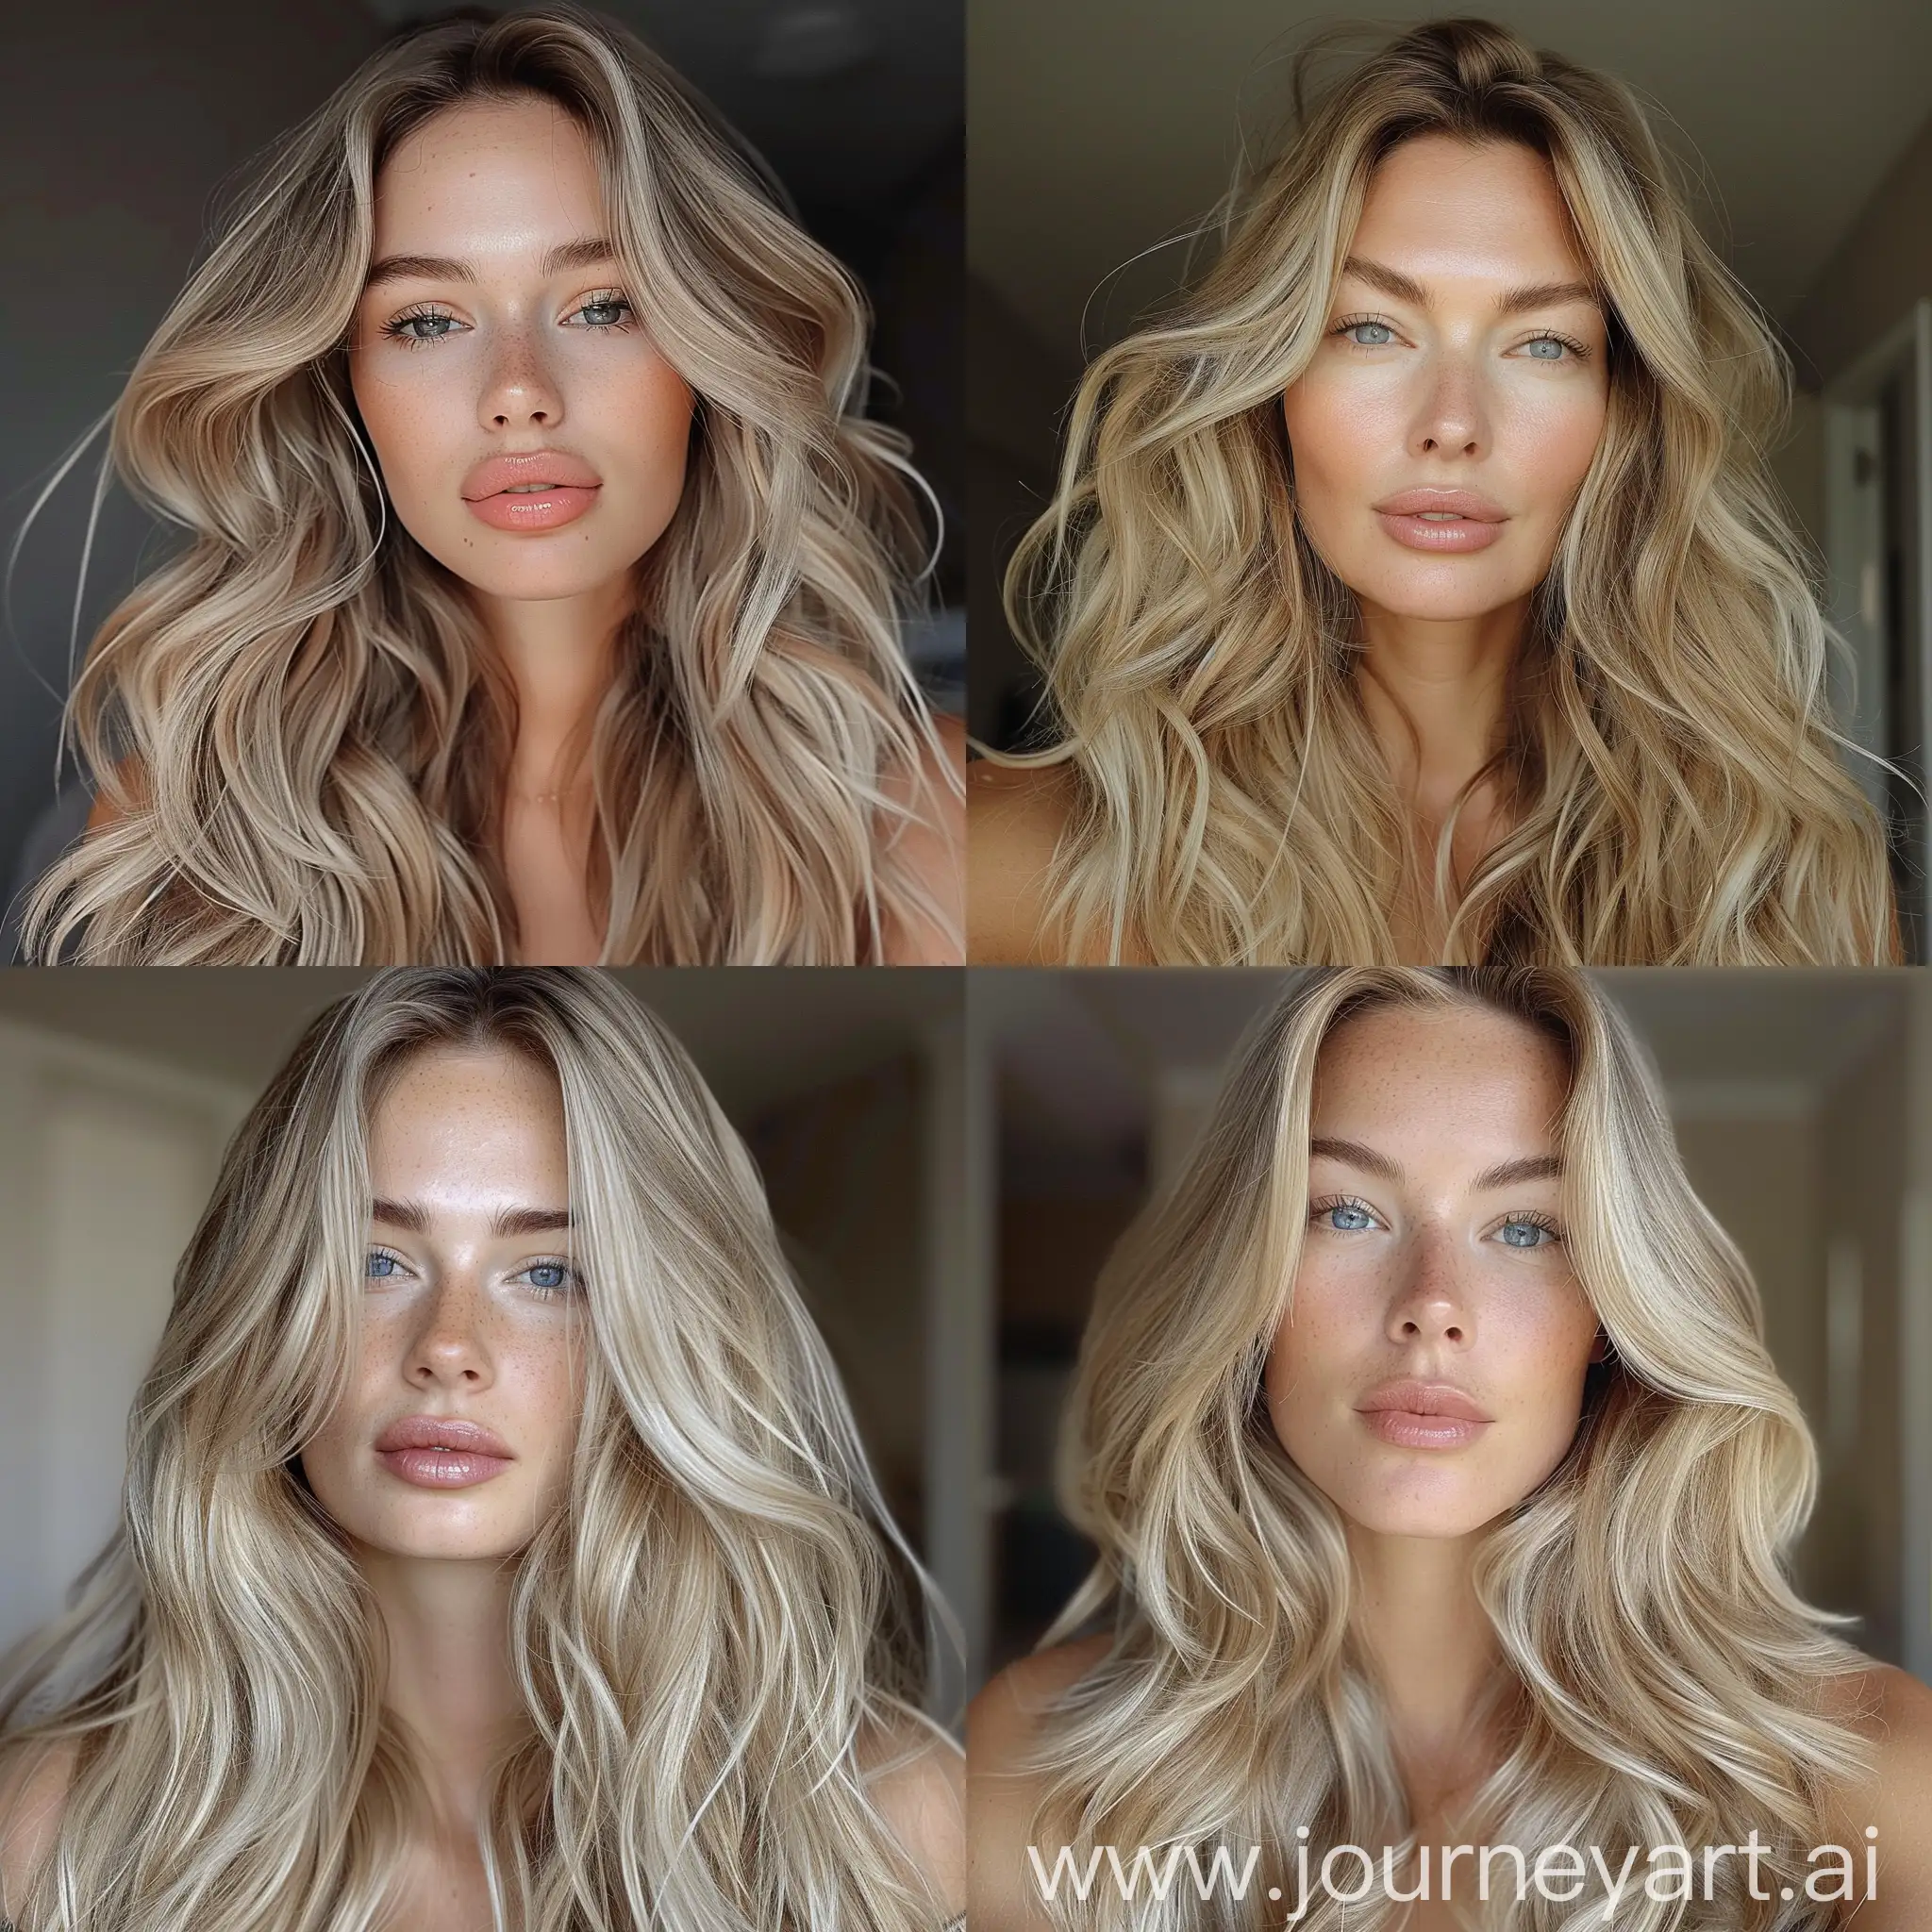 Blonde-Woman-with-Waves-in-Dim-Lighting-Selfie-for-Instagram